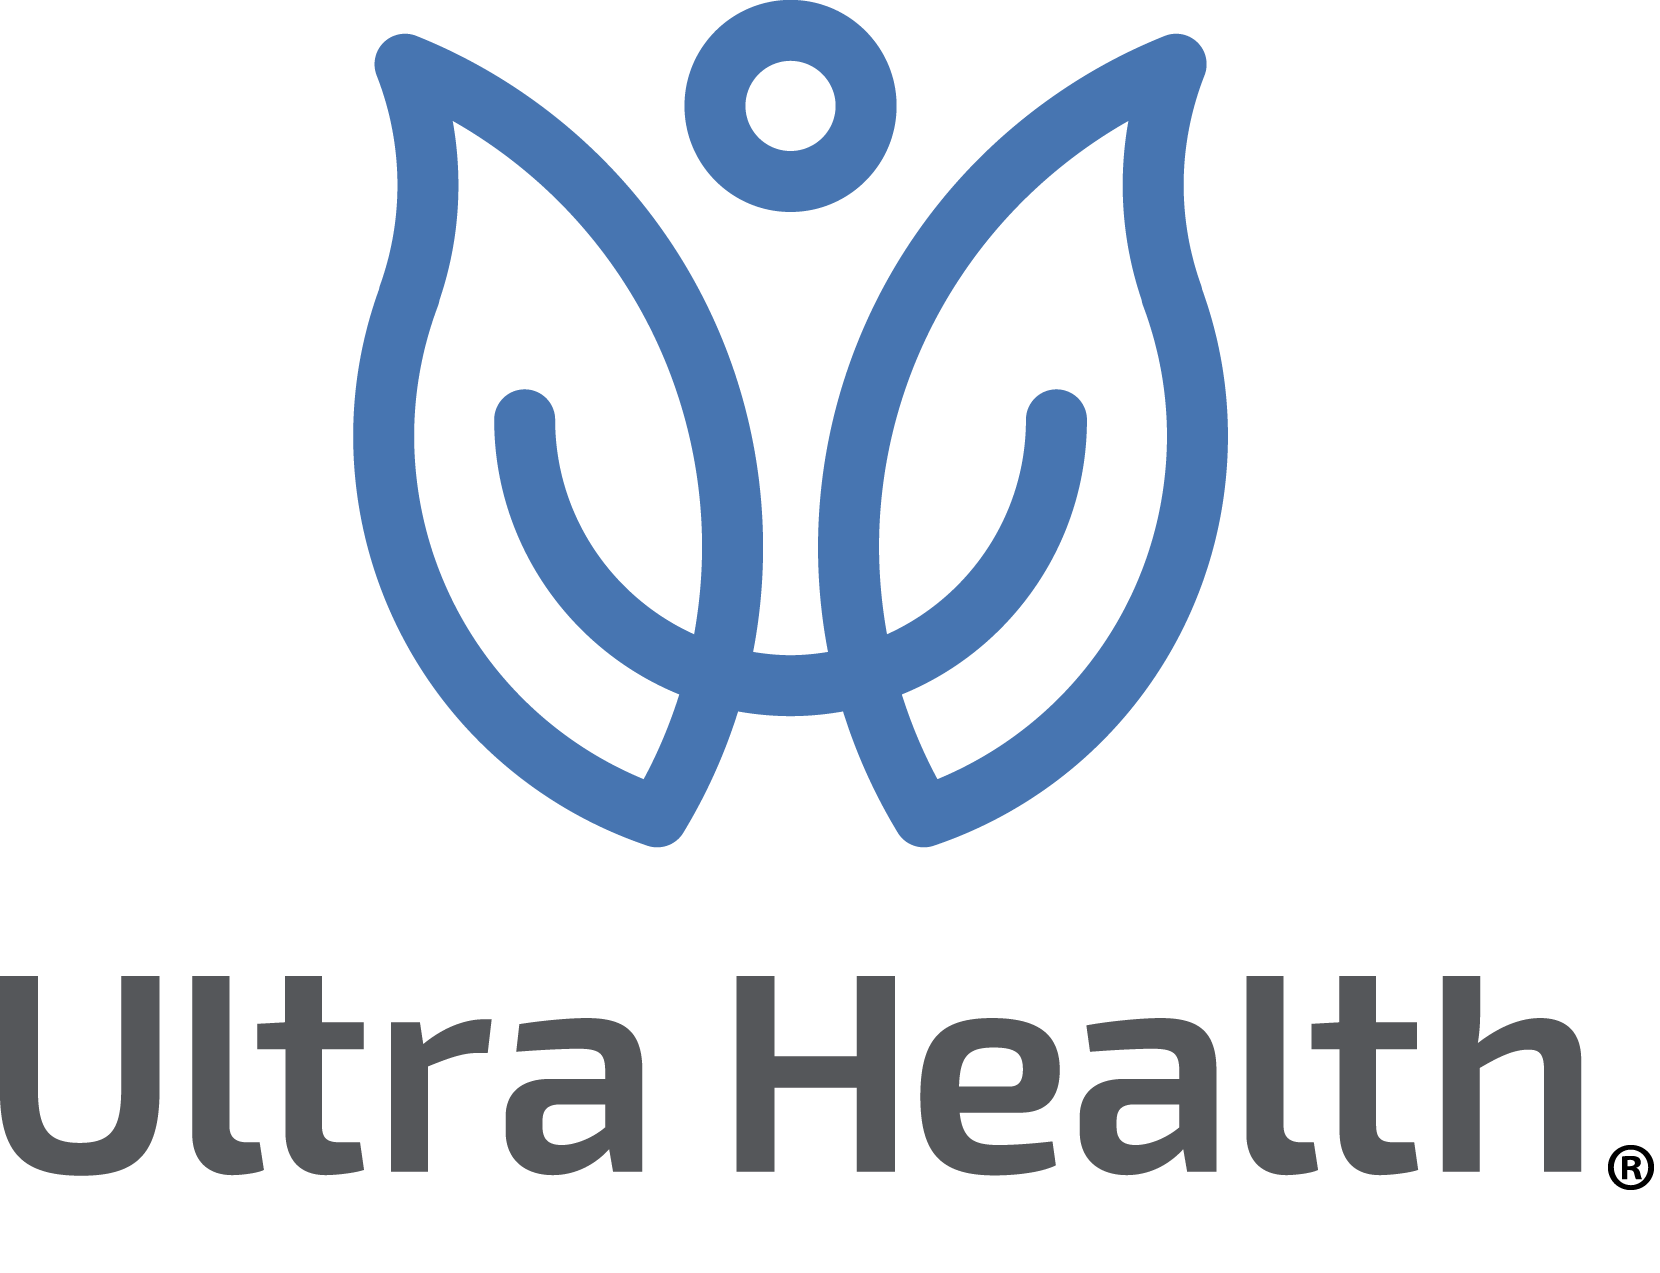 Ultra Health Dispensary Tucumcari